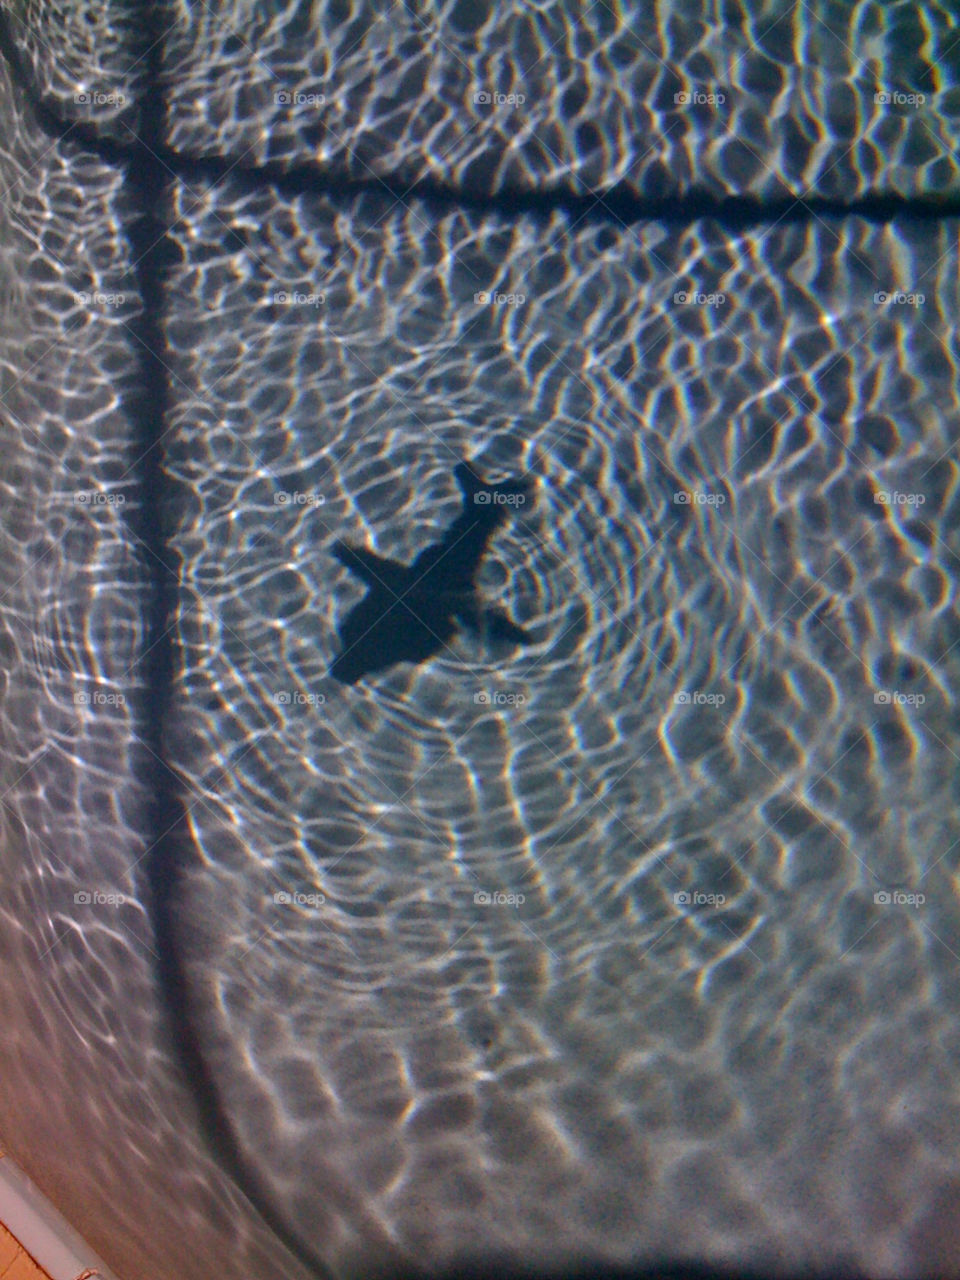 blue shadows pool shark by gootms